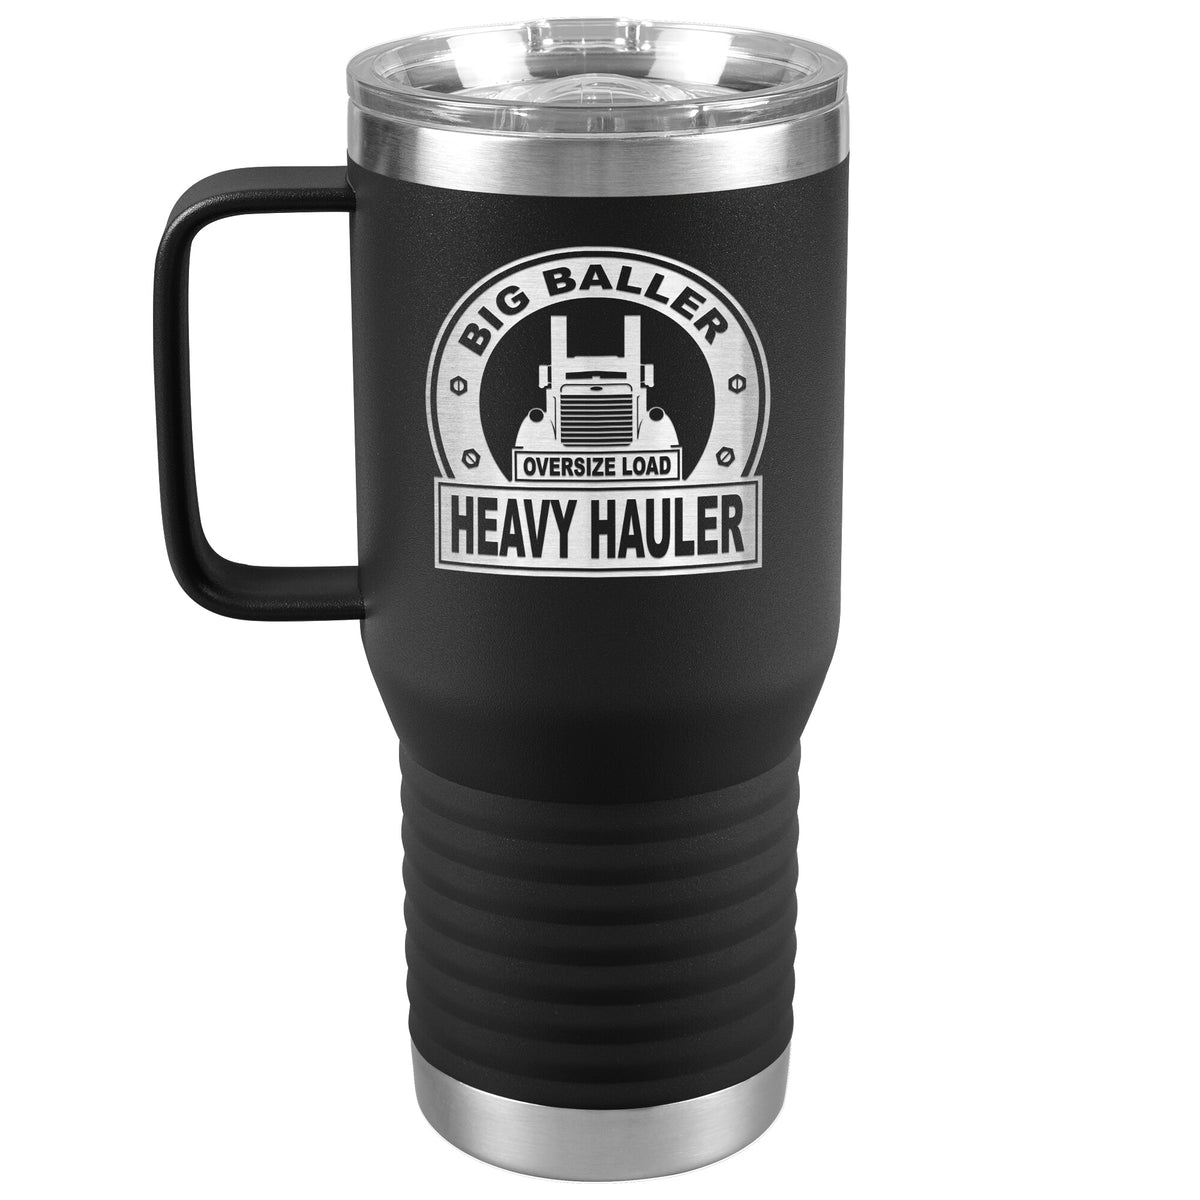 Big Baller Heavy Hauler - Pete - 20oz Handle Tumbler - Free Shipping